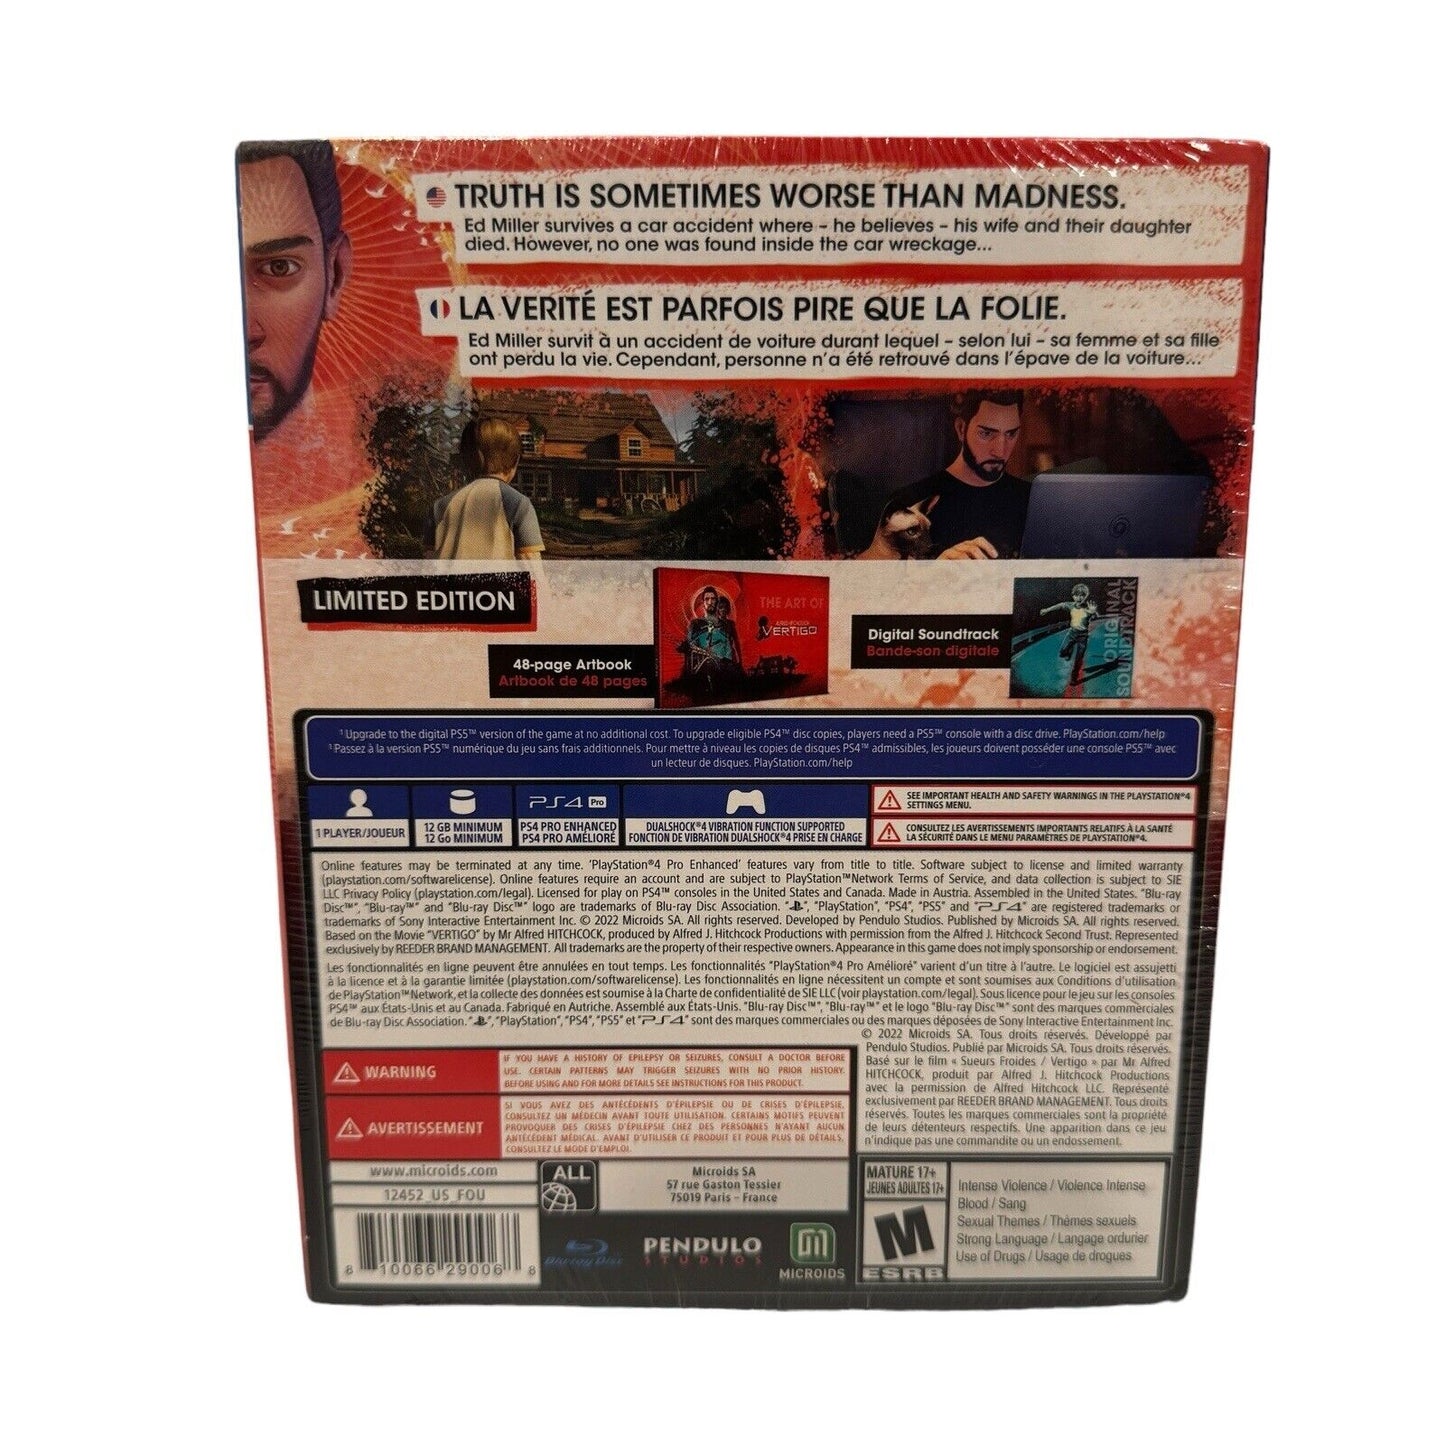 Alfred Hitchcock - Vertigo - Limited Edition - PS4 - Brand New | Factory Sealed